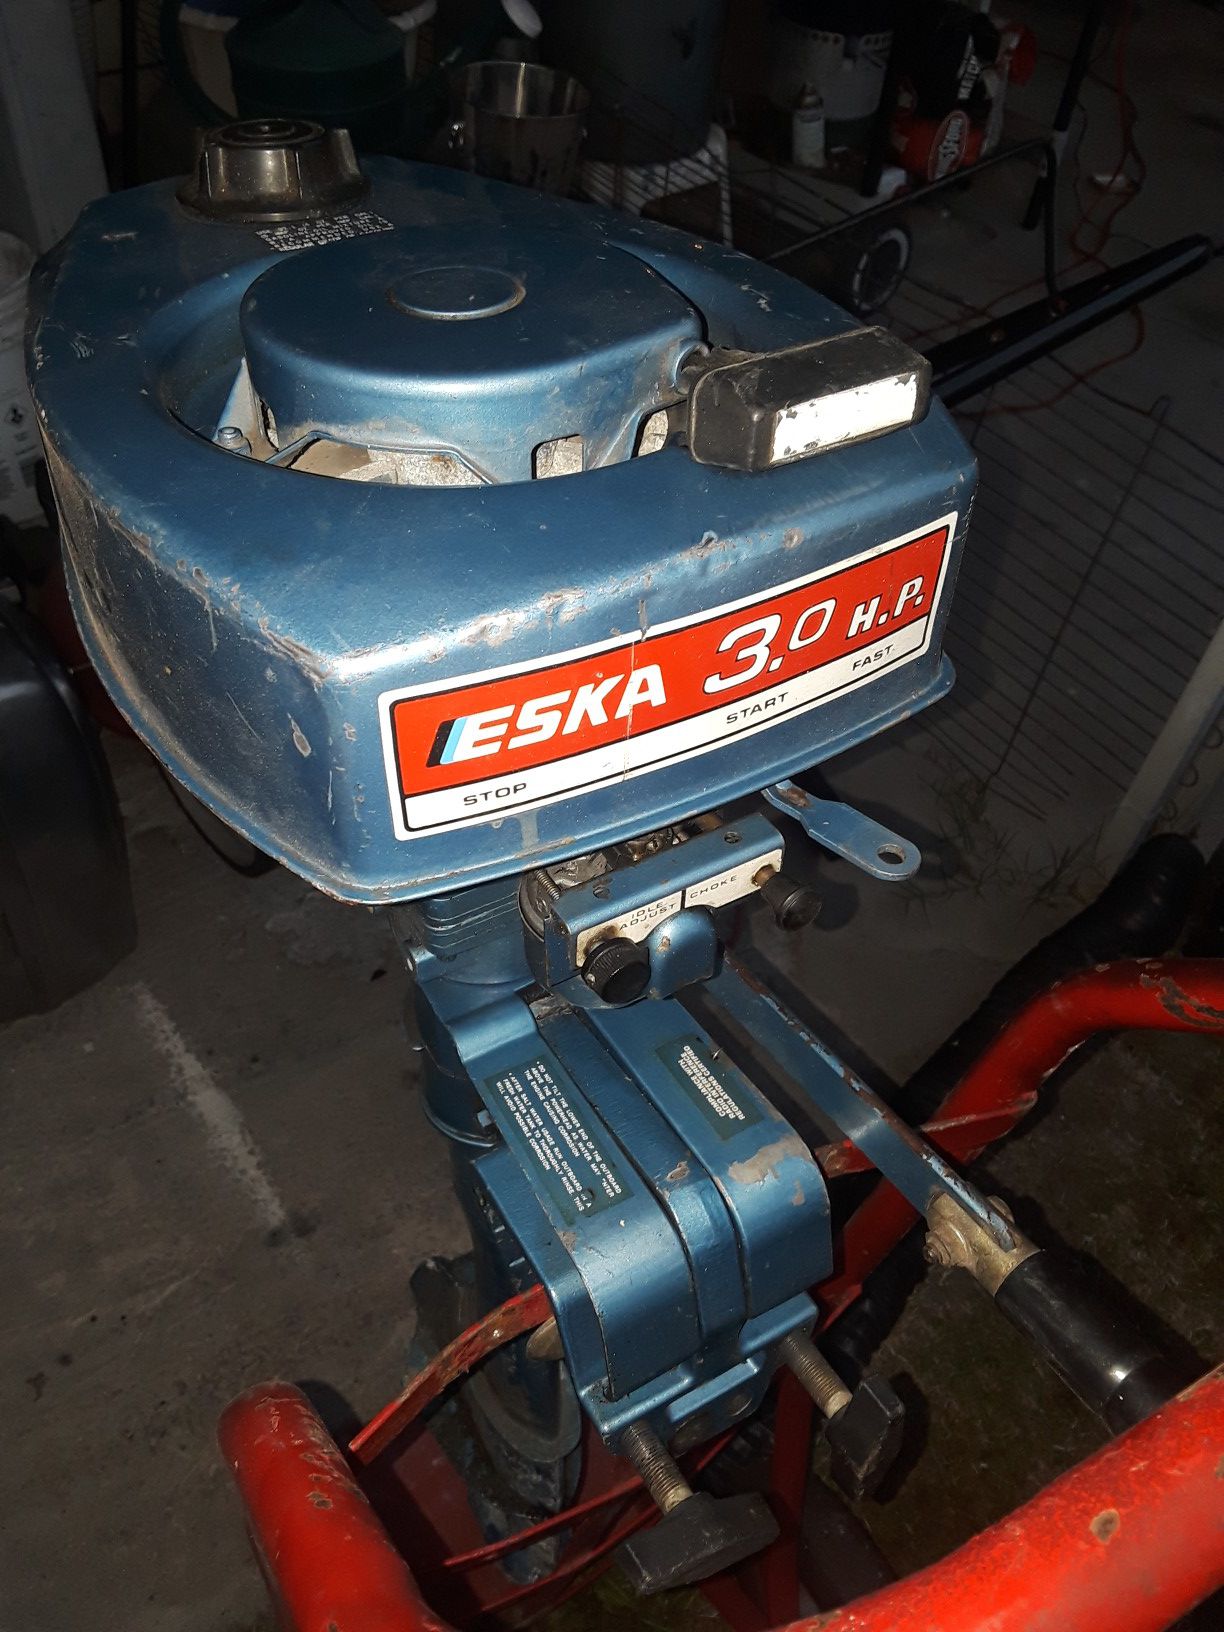 Sears brand Eska 3 horse boat motor.